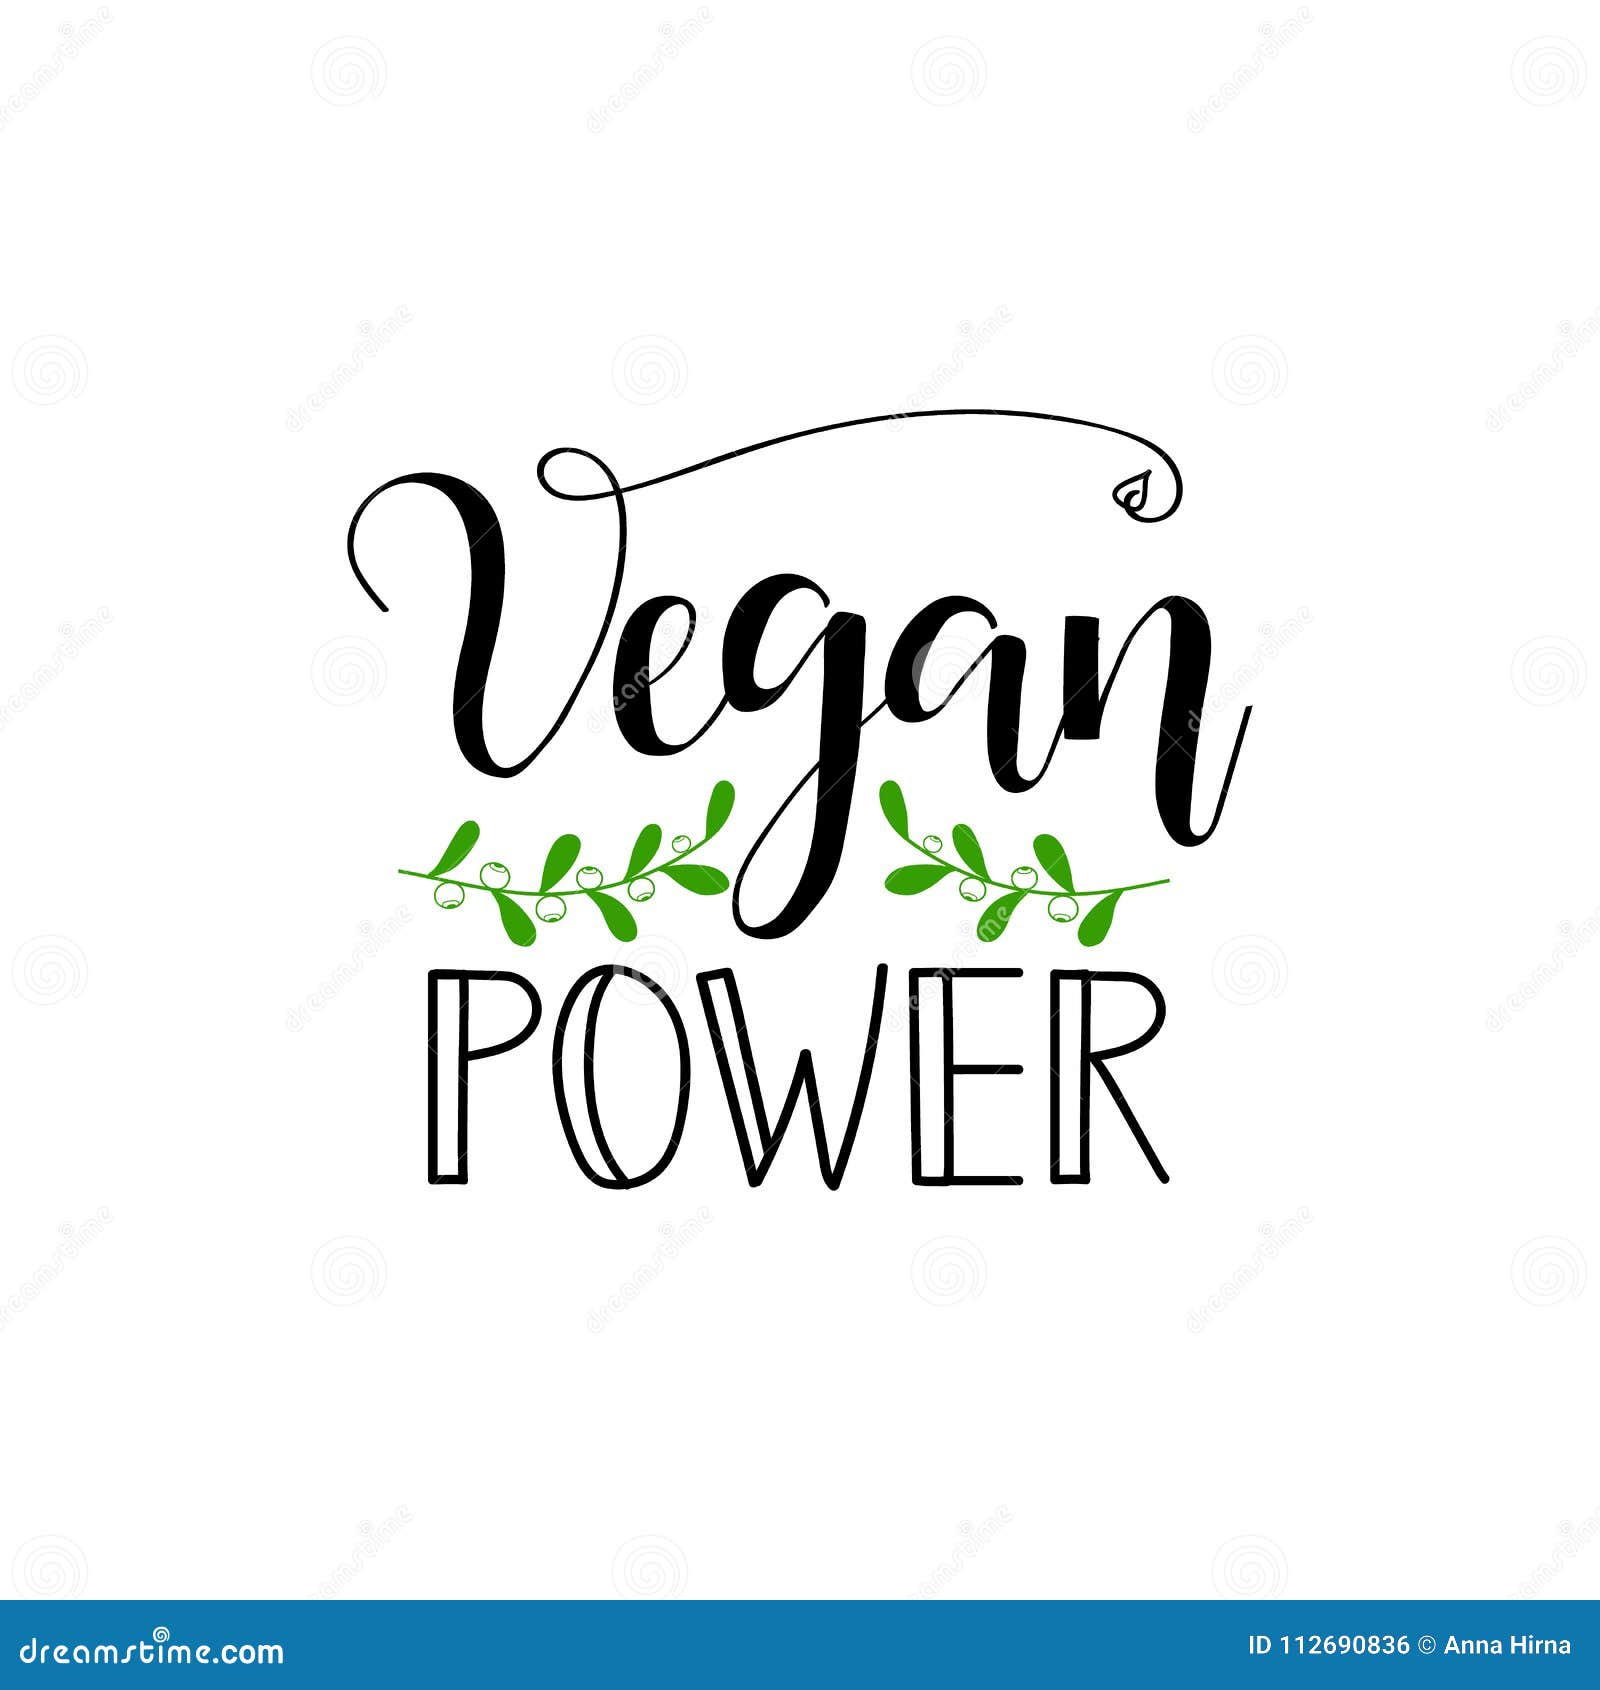 Vegan Sayings and Quotes Posters and Veganism Prints Vegan Home Décor Artwork